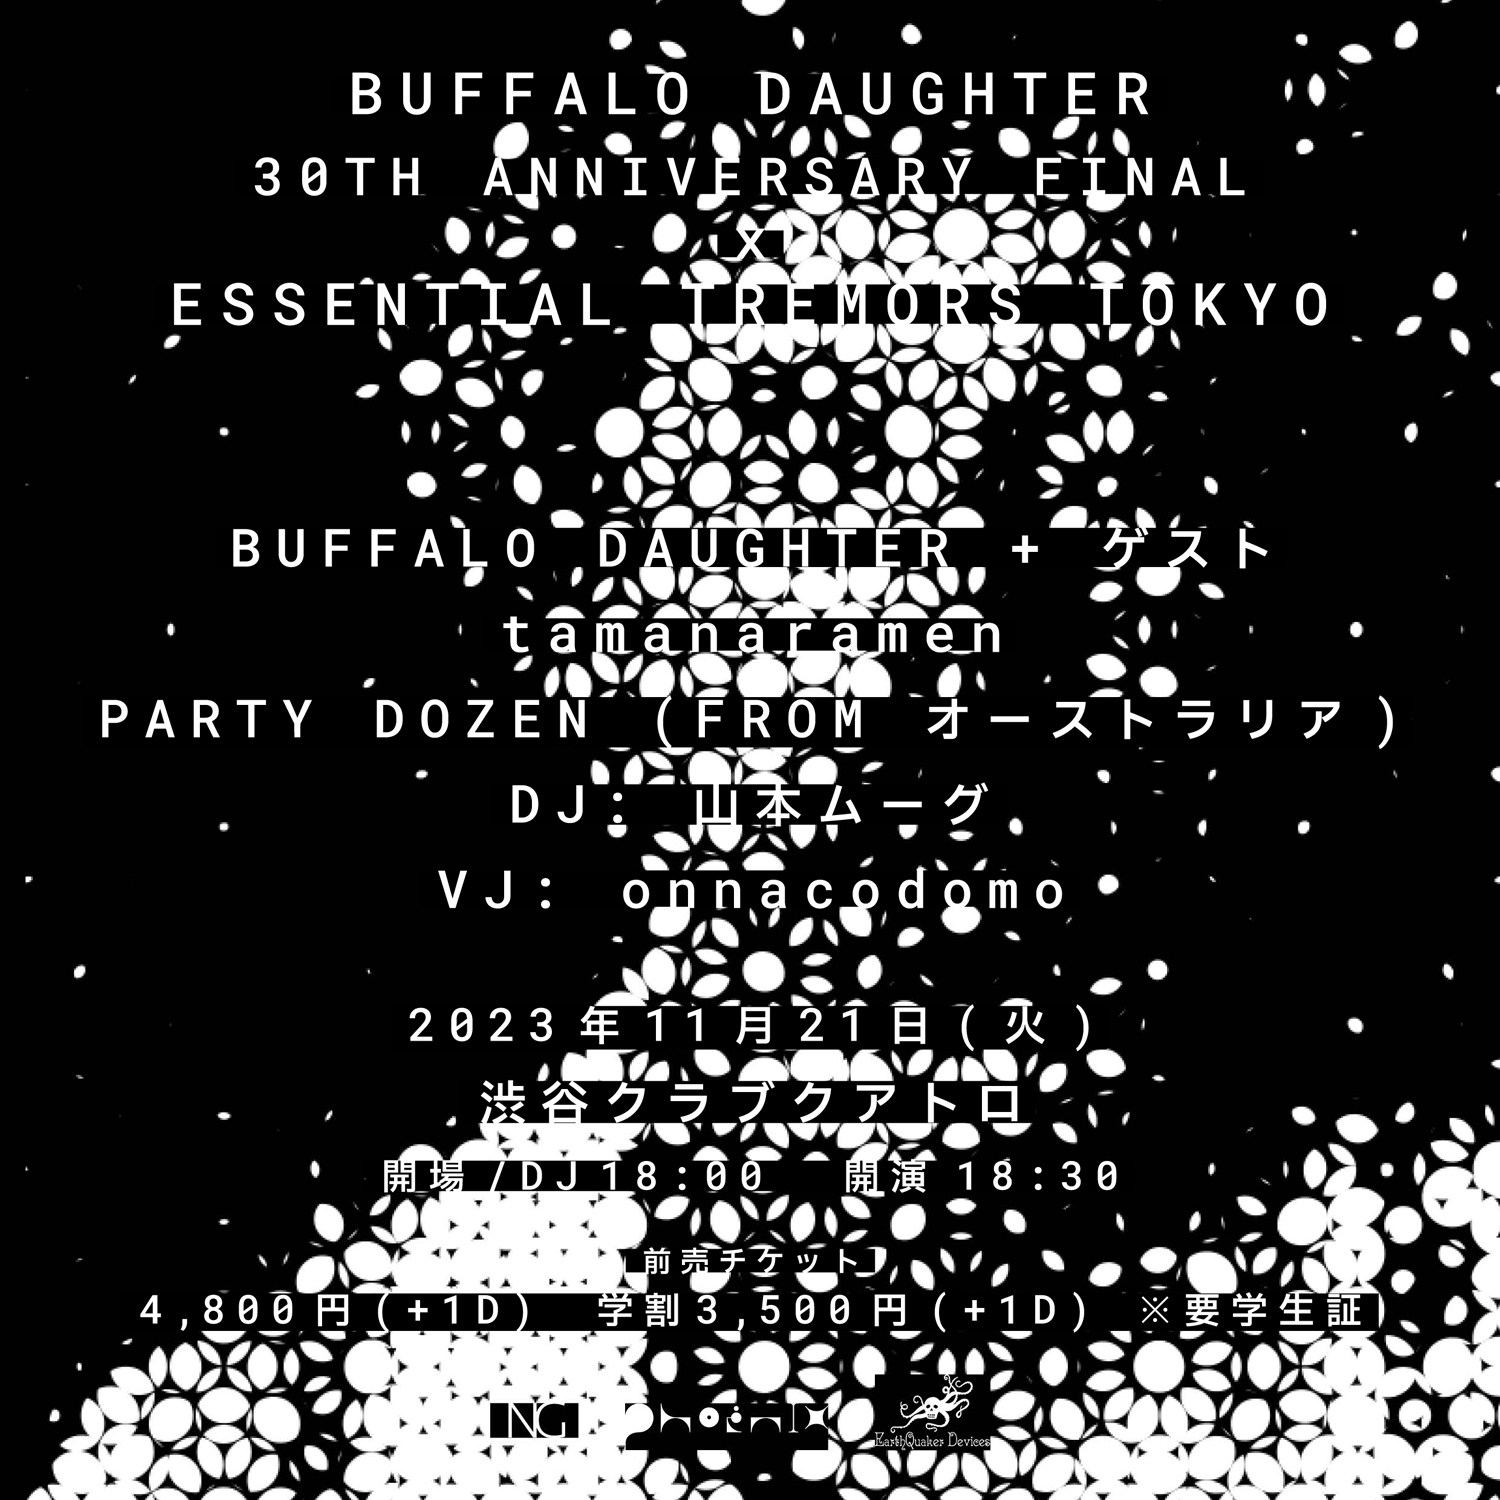 「Buffalo Daughter 30th Anniversary Final x Essential Tremors Tokyo」